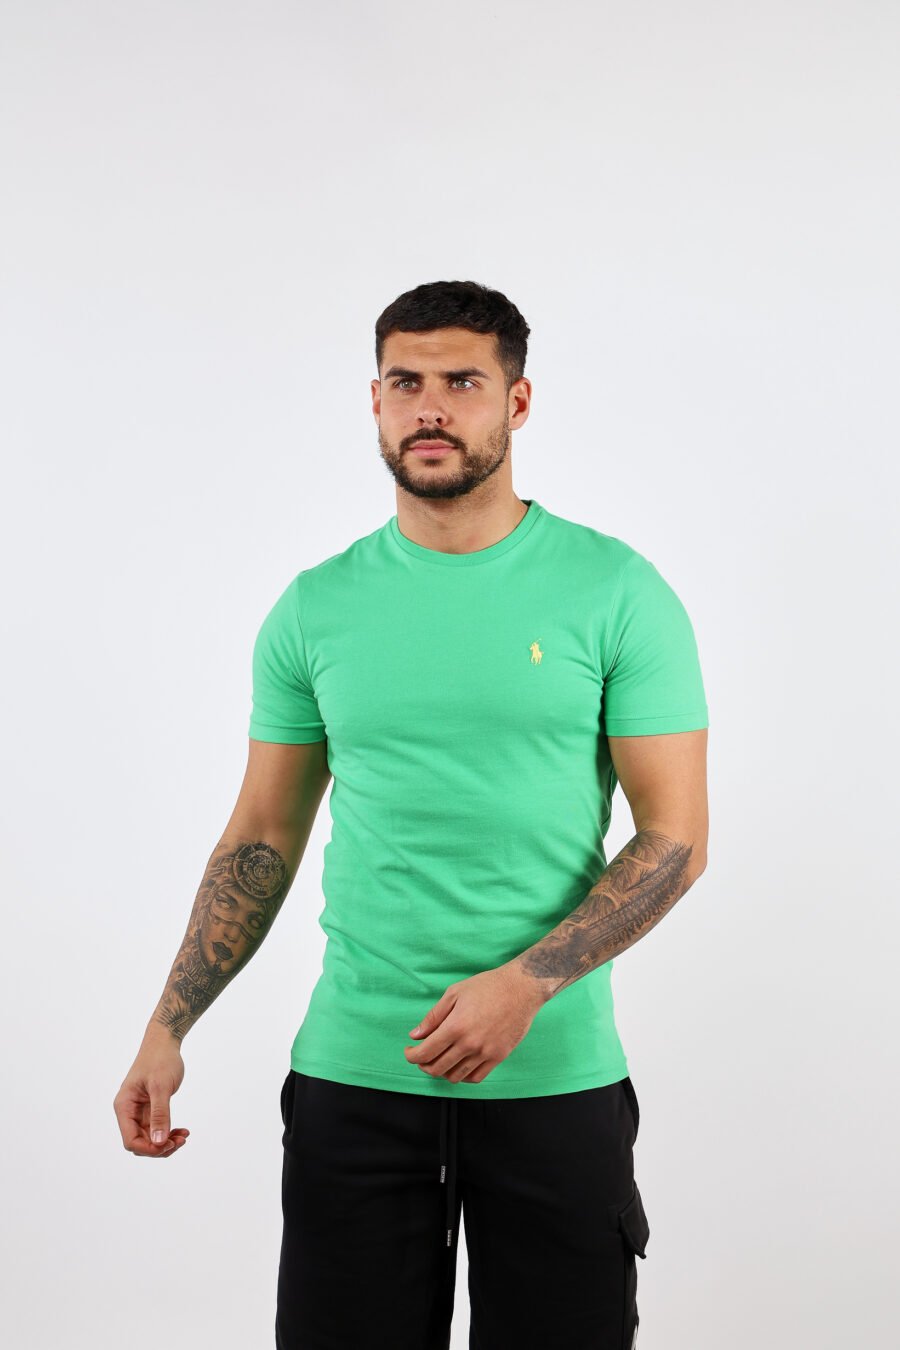 T-shirt verde e amarela com mini-logotipo "polo" - BLS Fashion 301